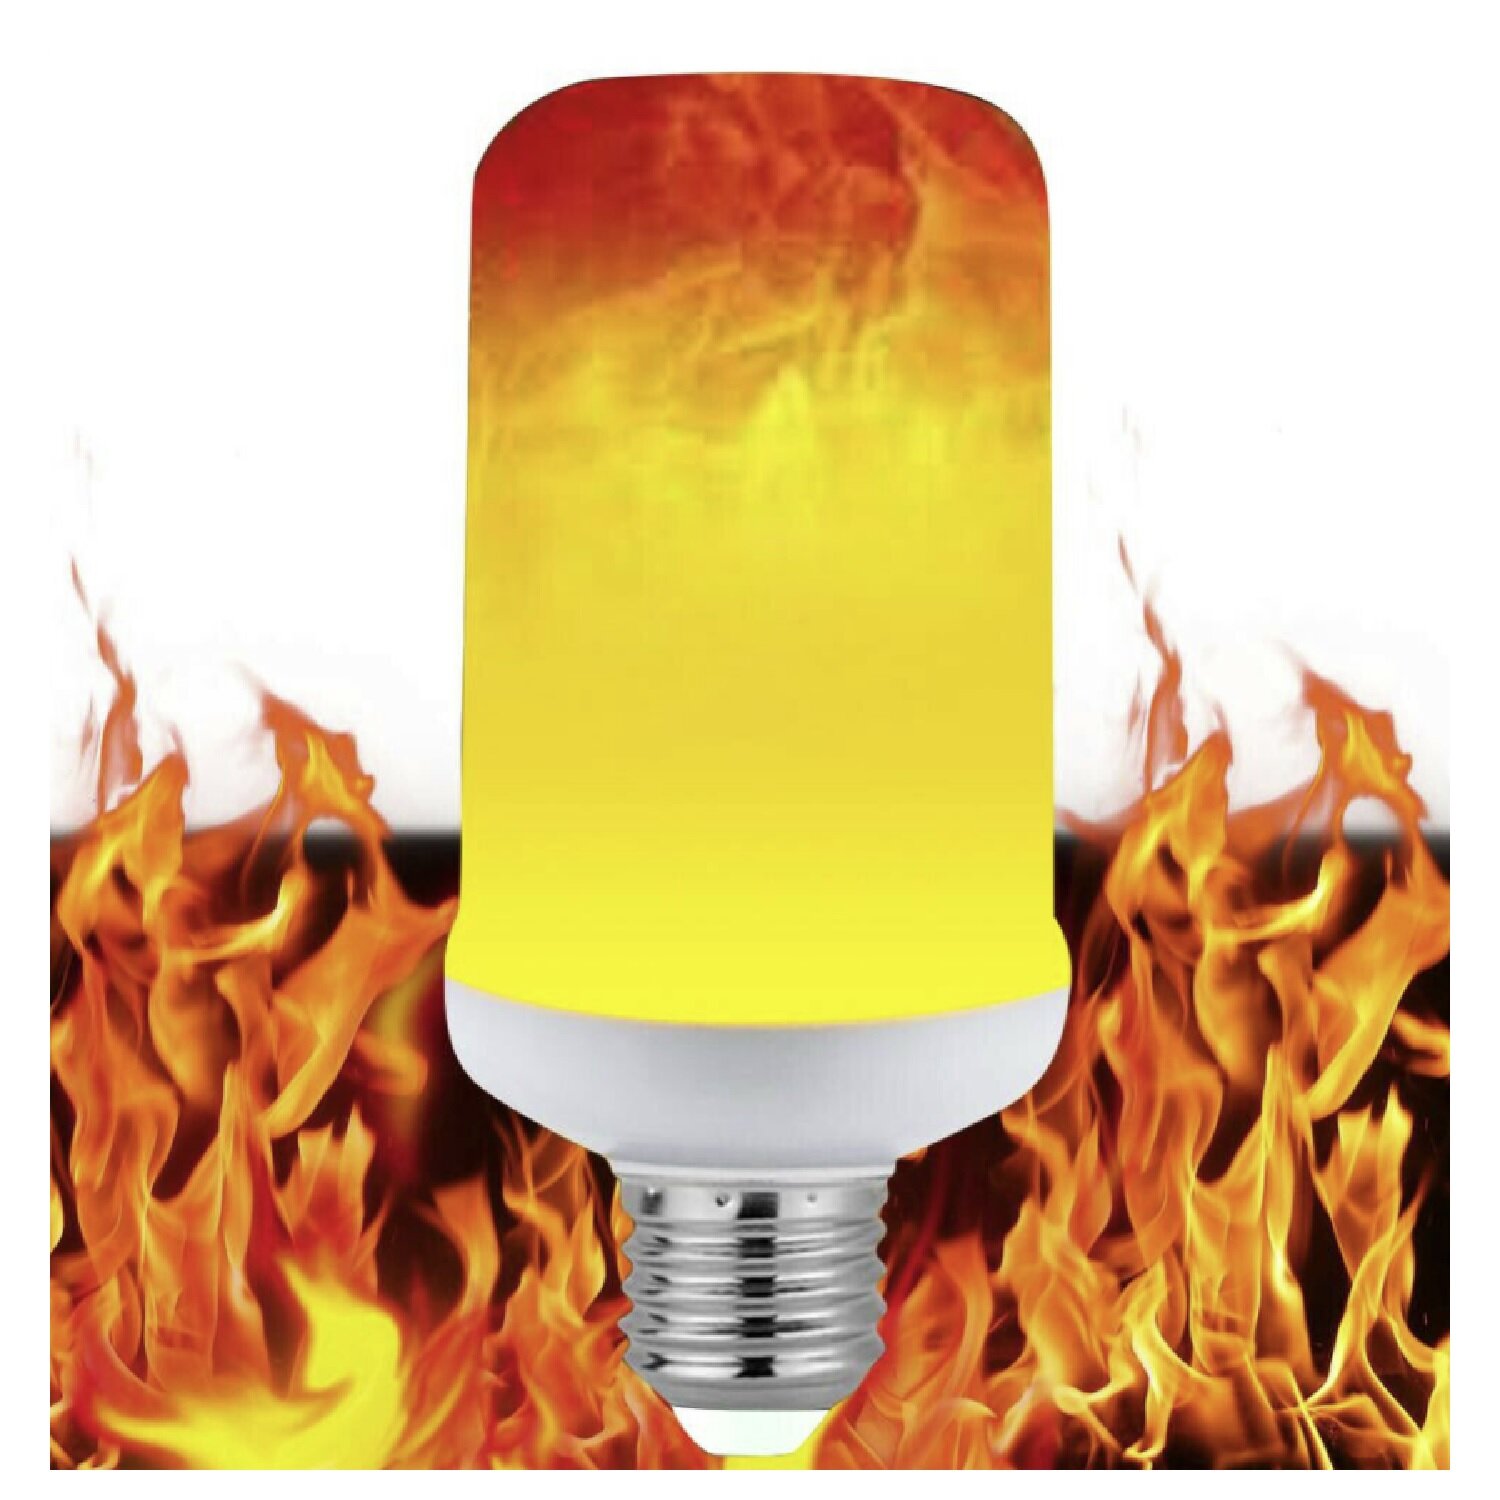 Led burning flicker flame effect fire light bulb  candelabra E27 lamp simulated 